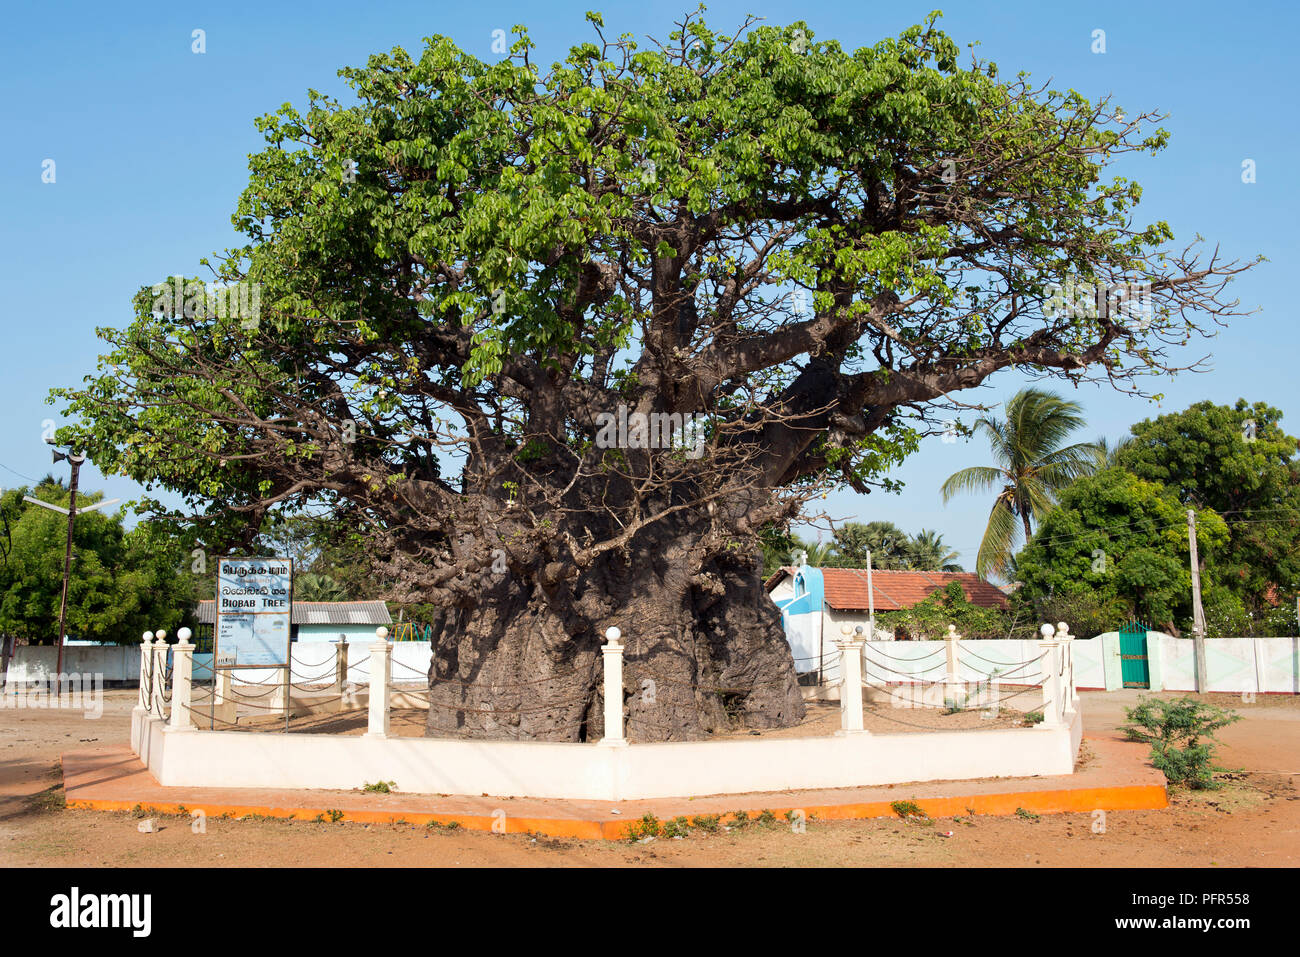 Sri Lanka, North Eastern Province, Talaimannar, Mannar Island, baobab tree surrounded with fence Stock Photo